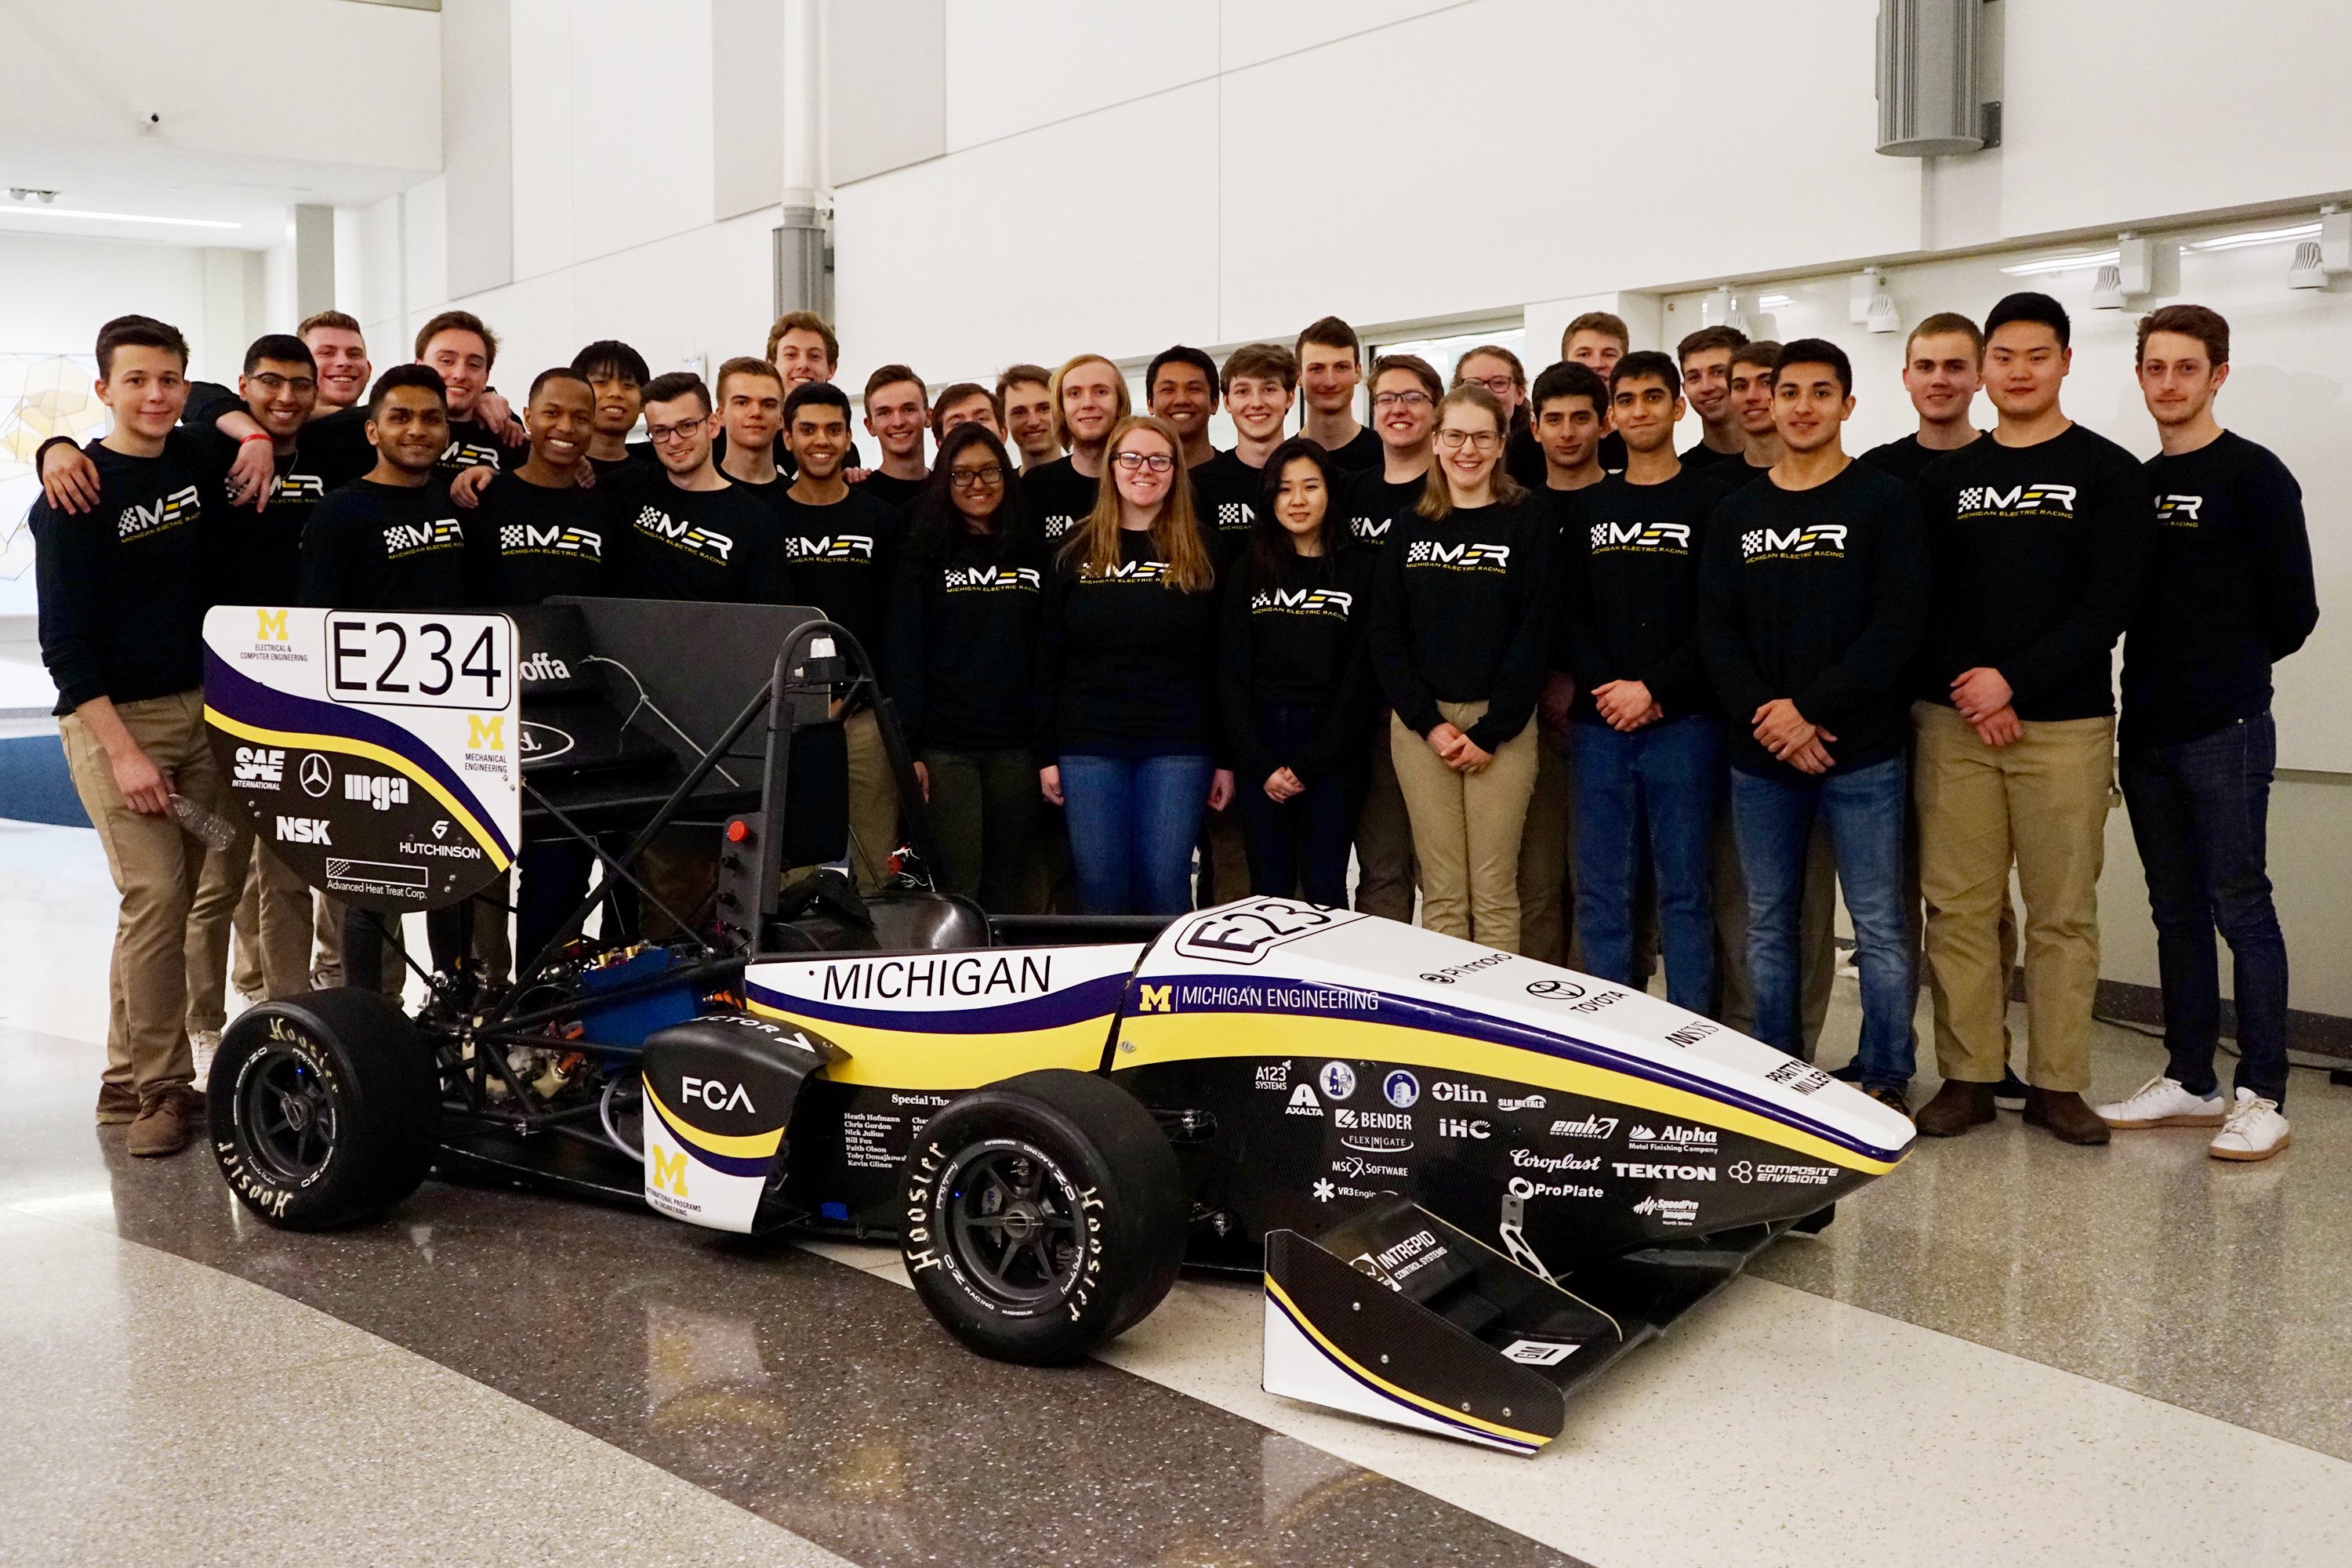 The Michigan Electric Racing Team.